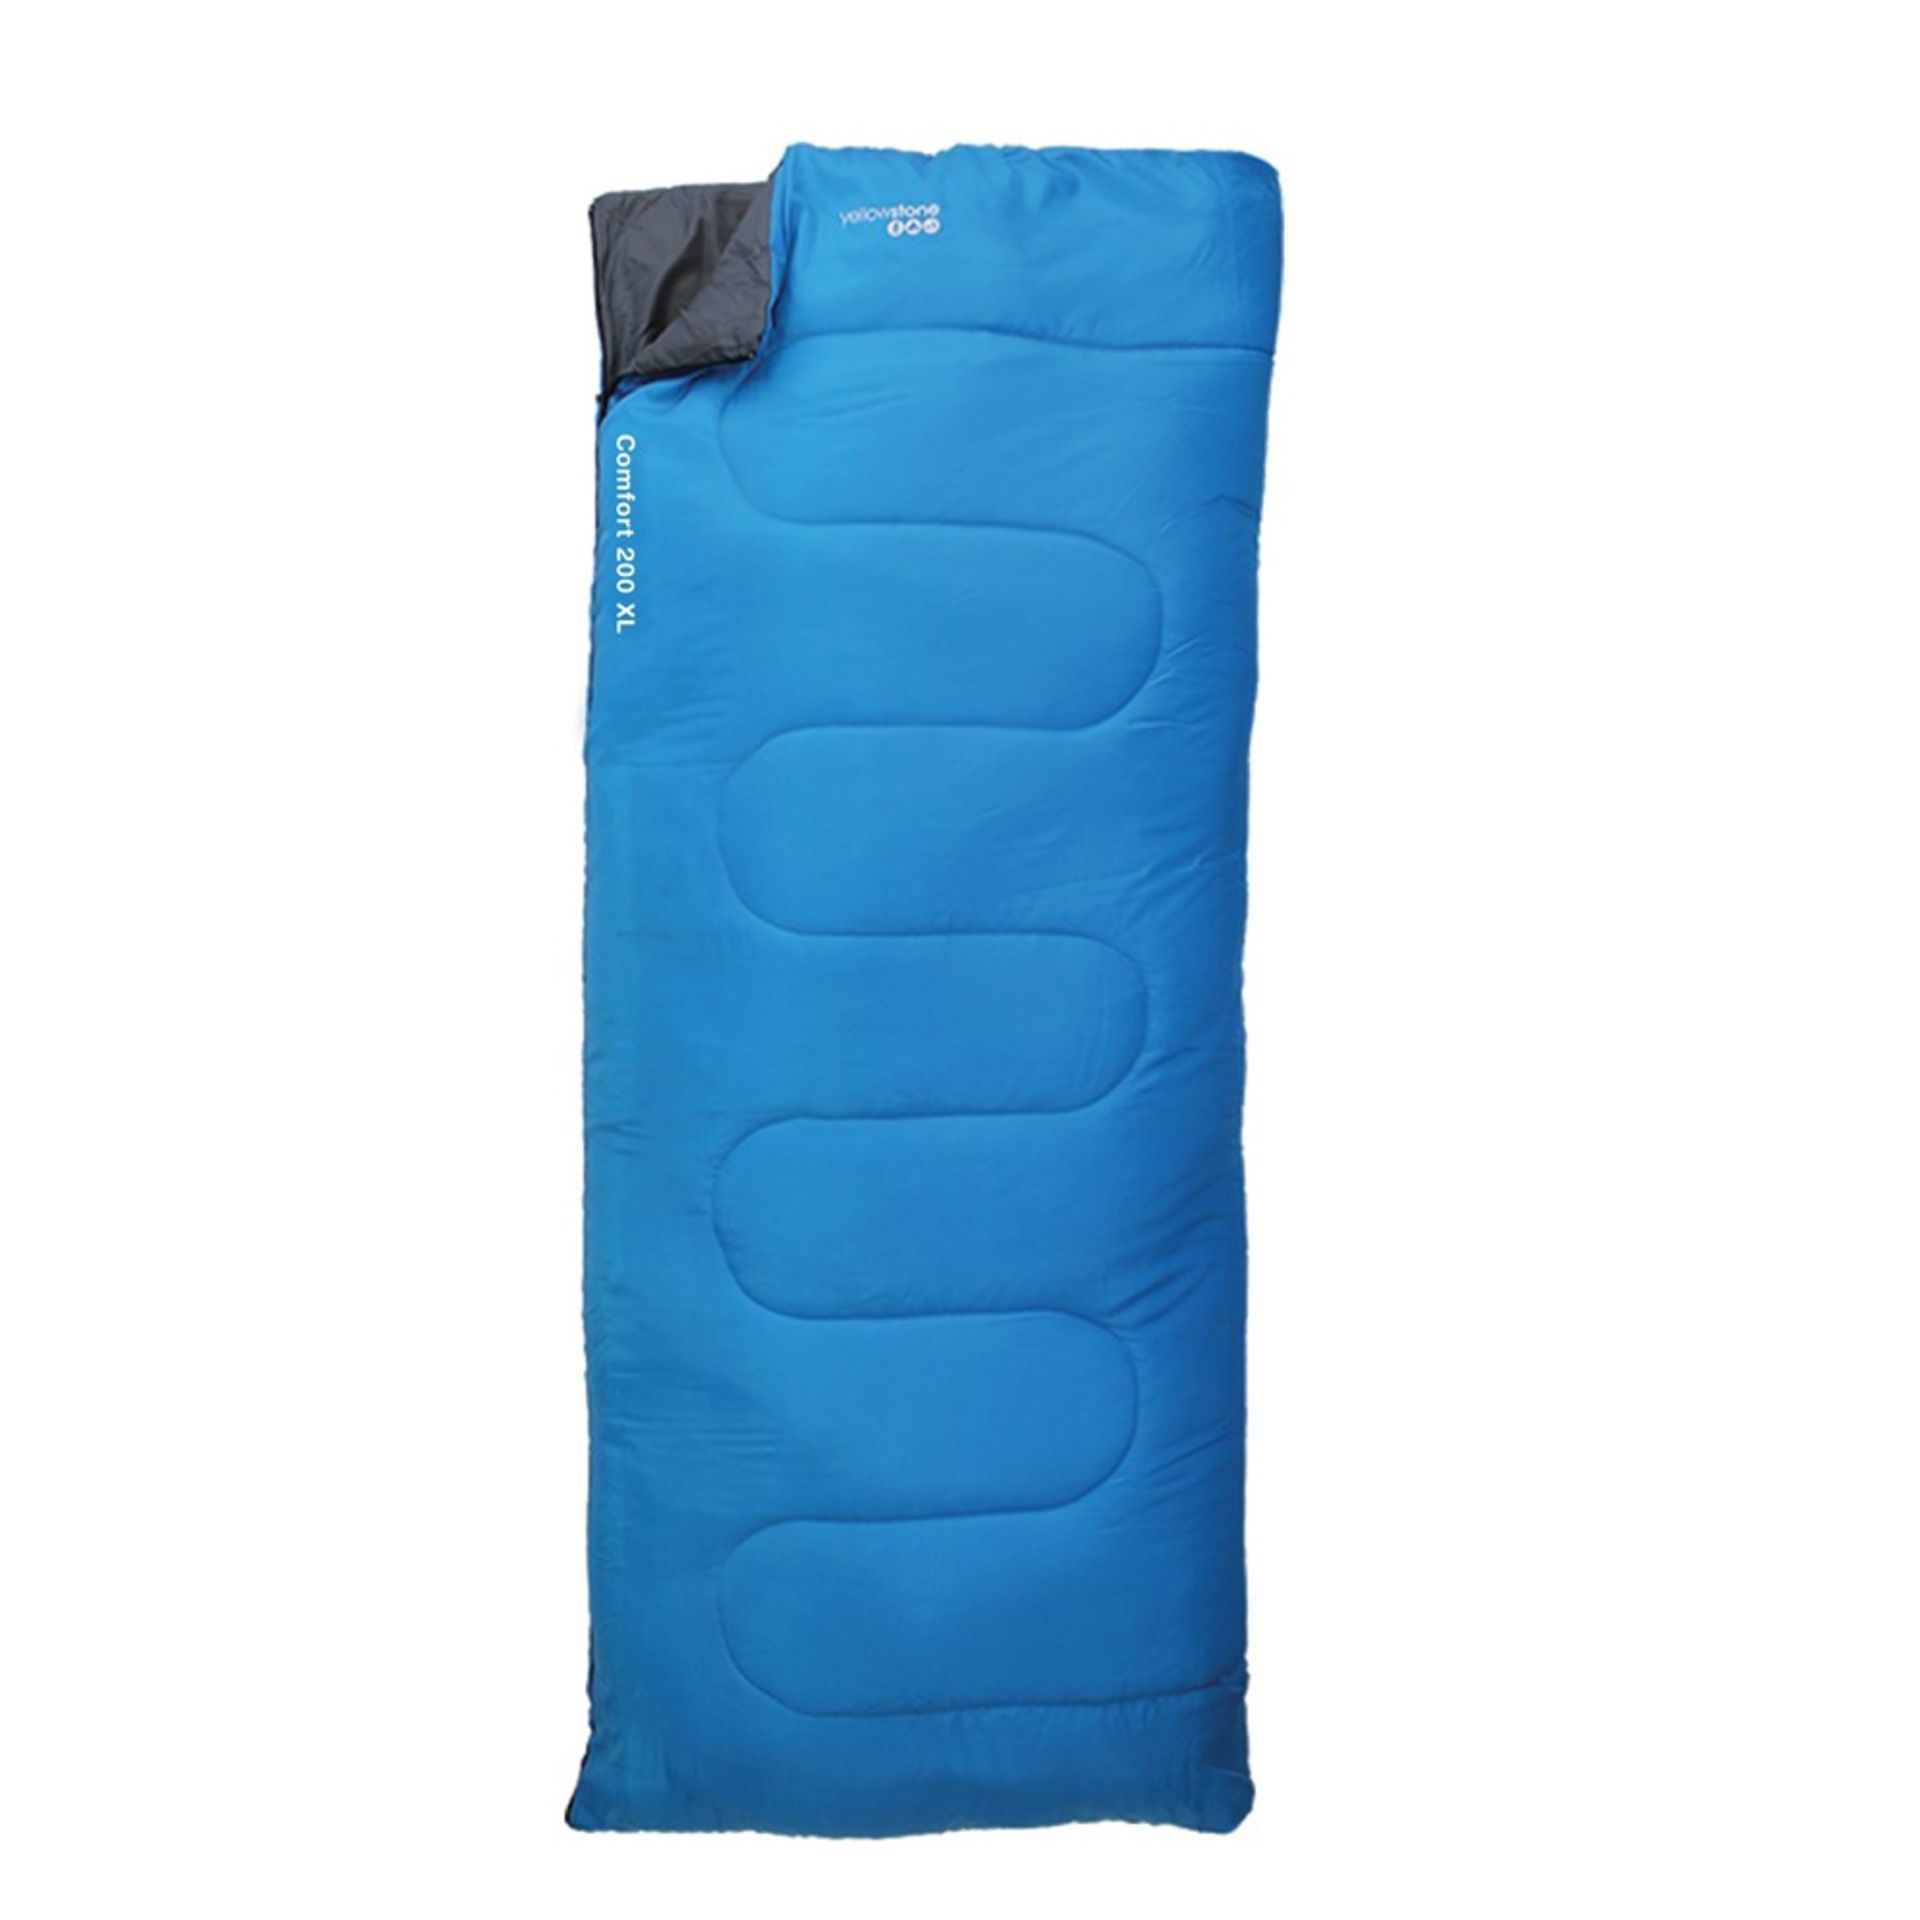 Grade C Comfort 200 XL blue Sleeping Bag